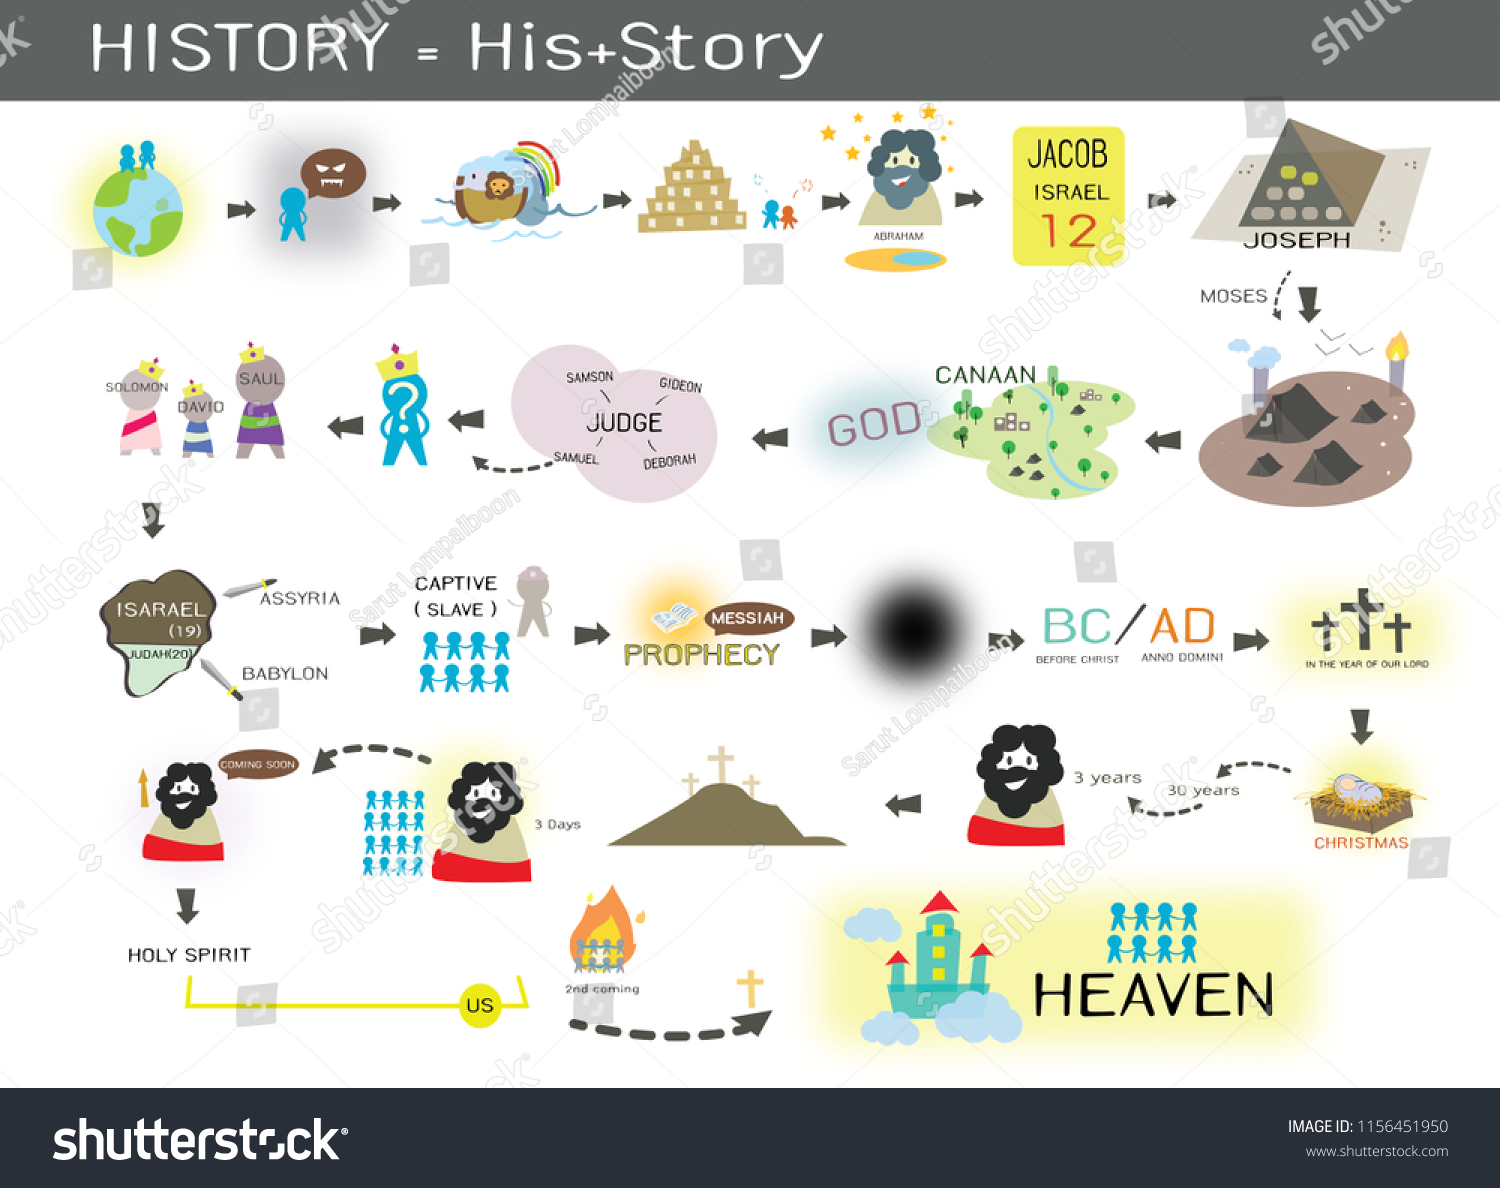 Bible Timeline History